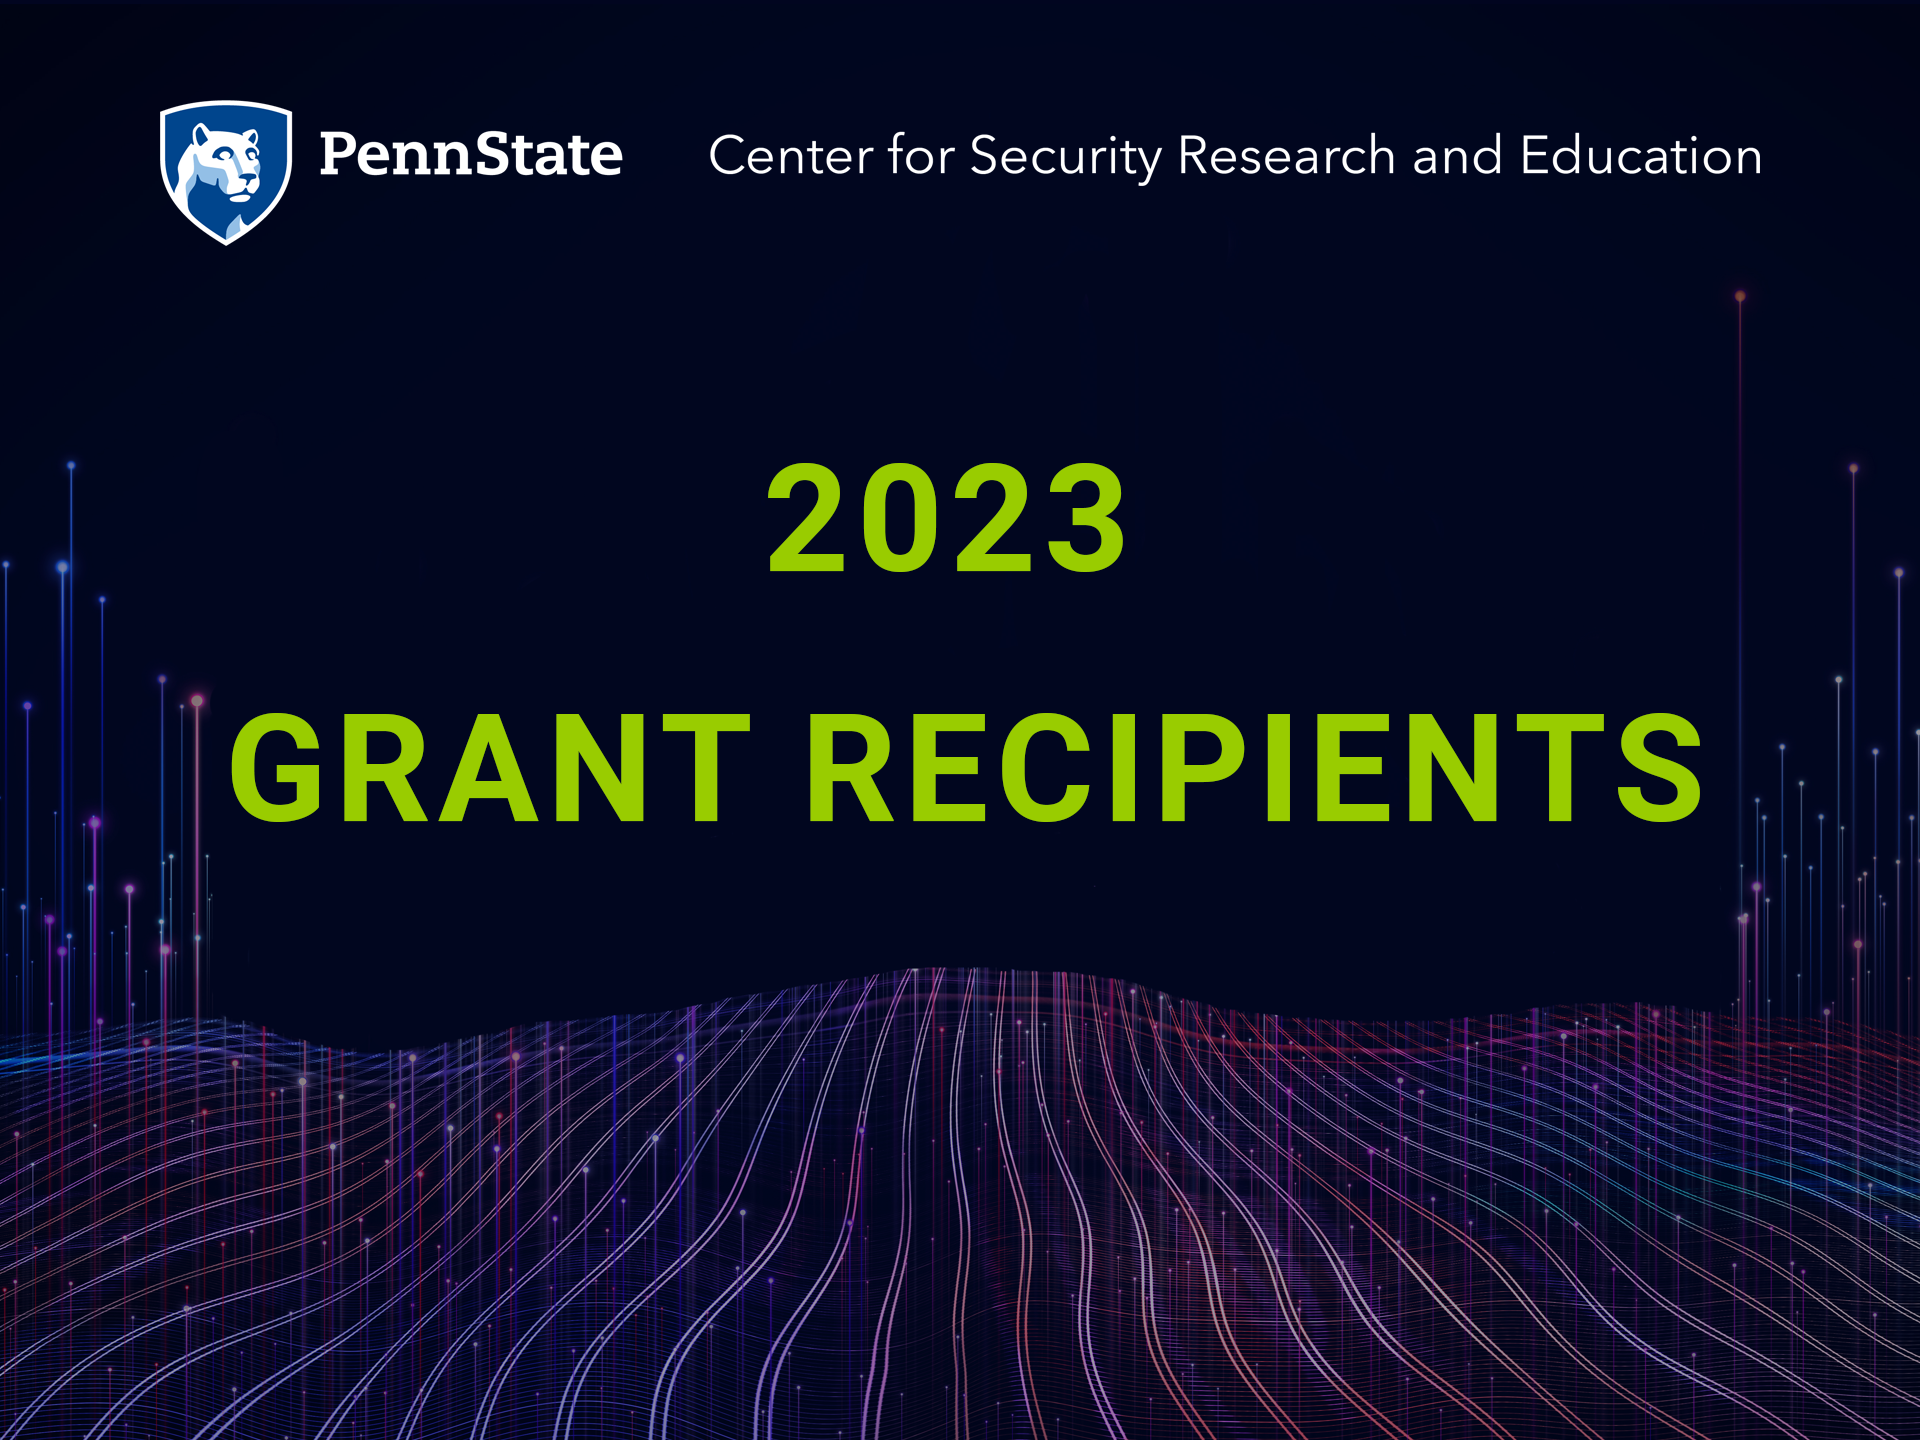 Penn State security center announces 2023 grant recipients